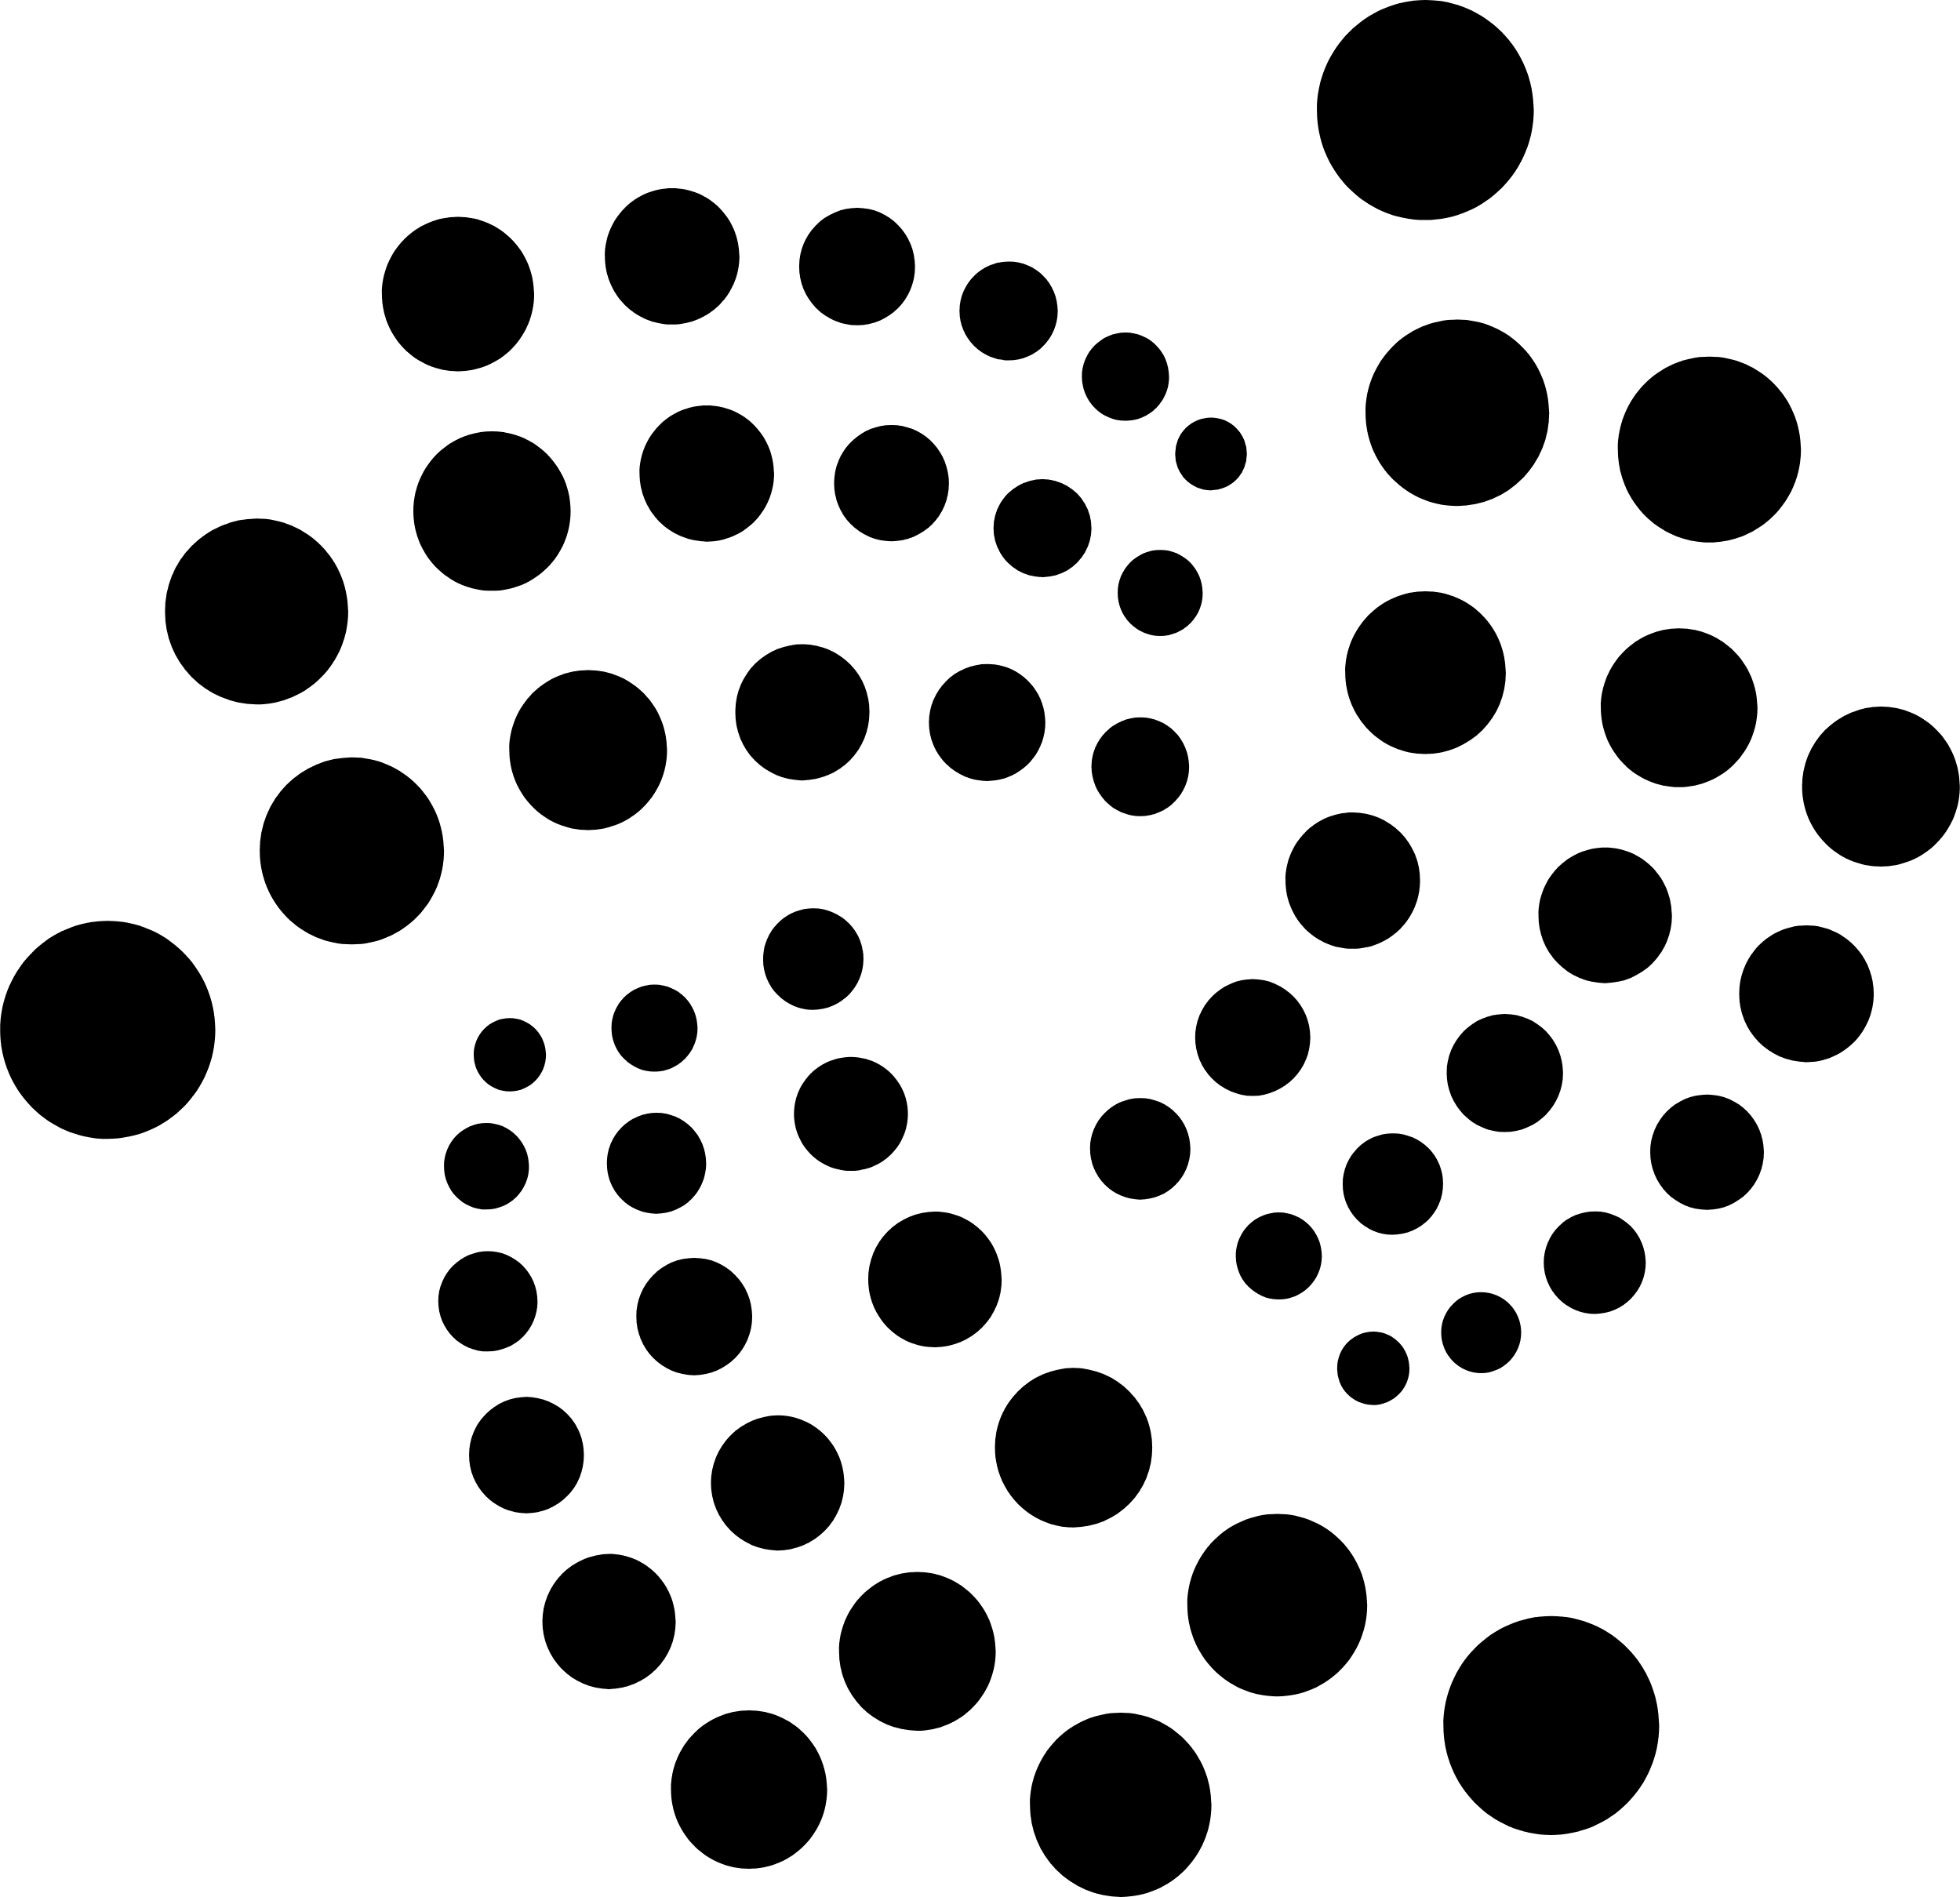 IOTA logo in svg format